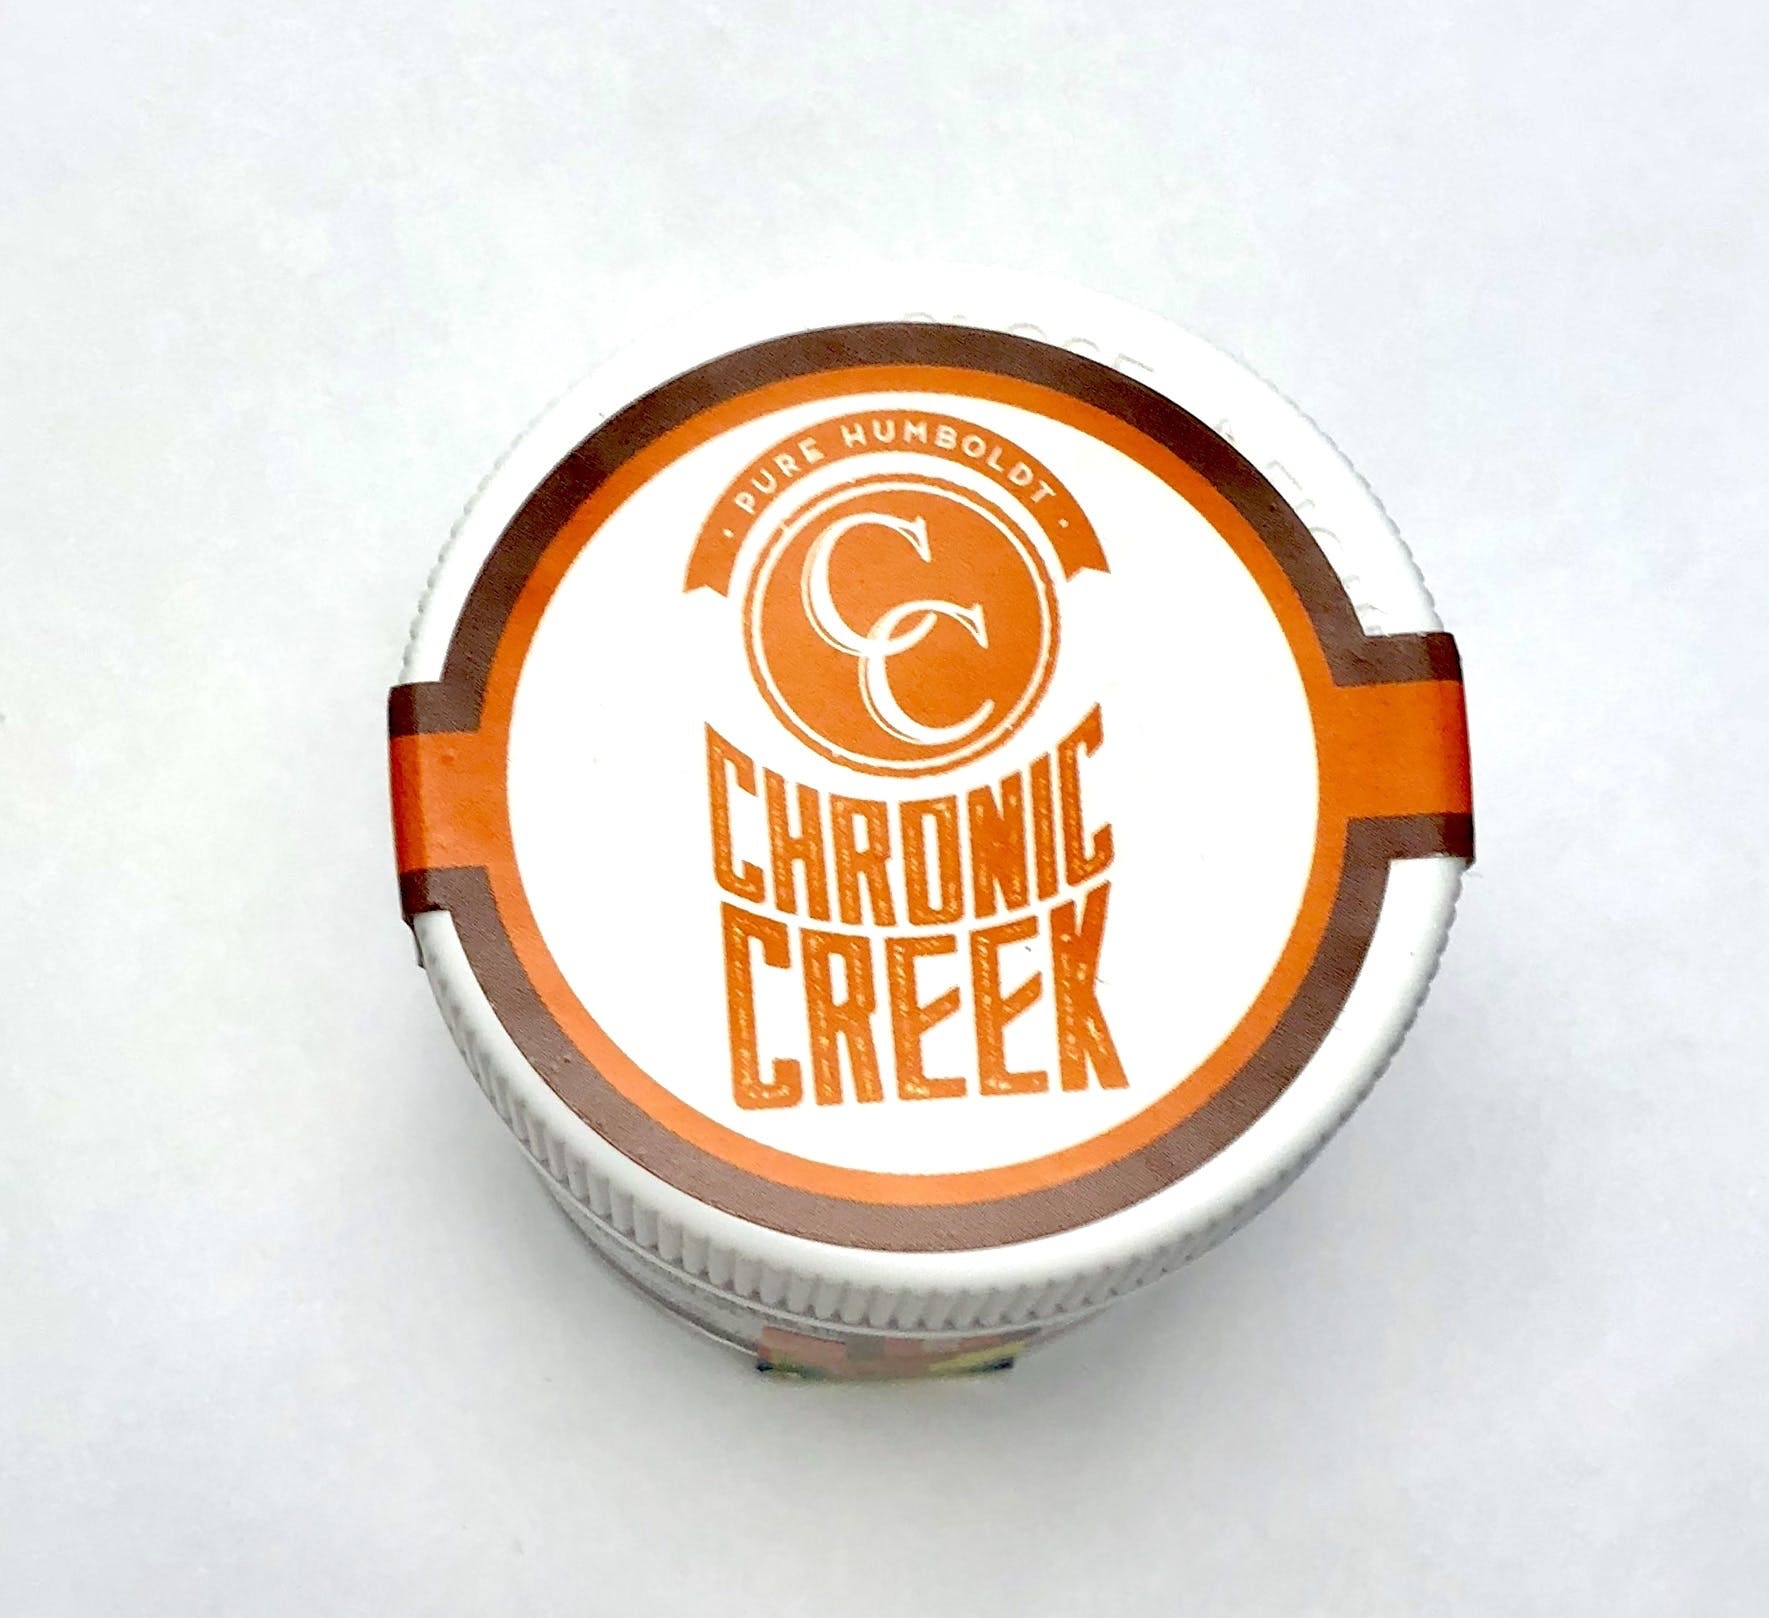 Chronic Creek - 4G